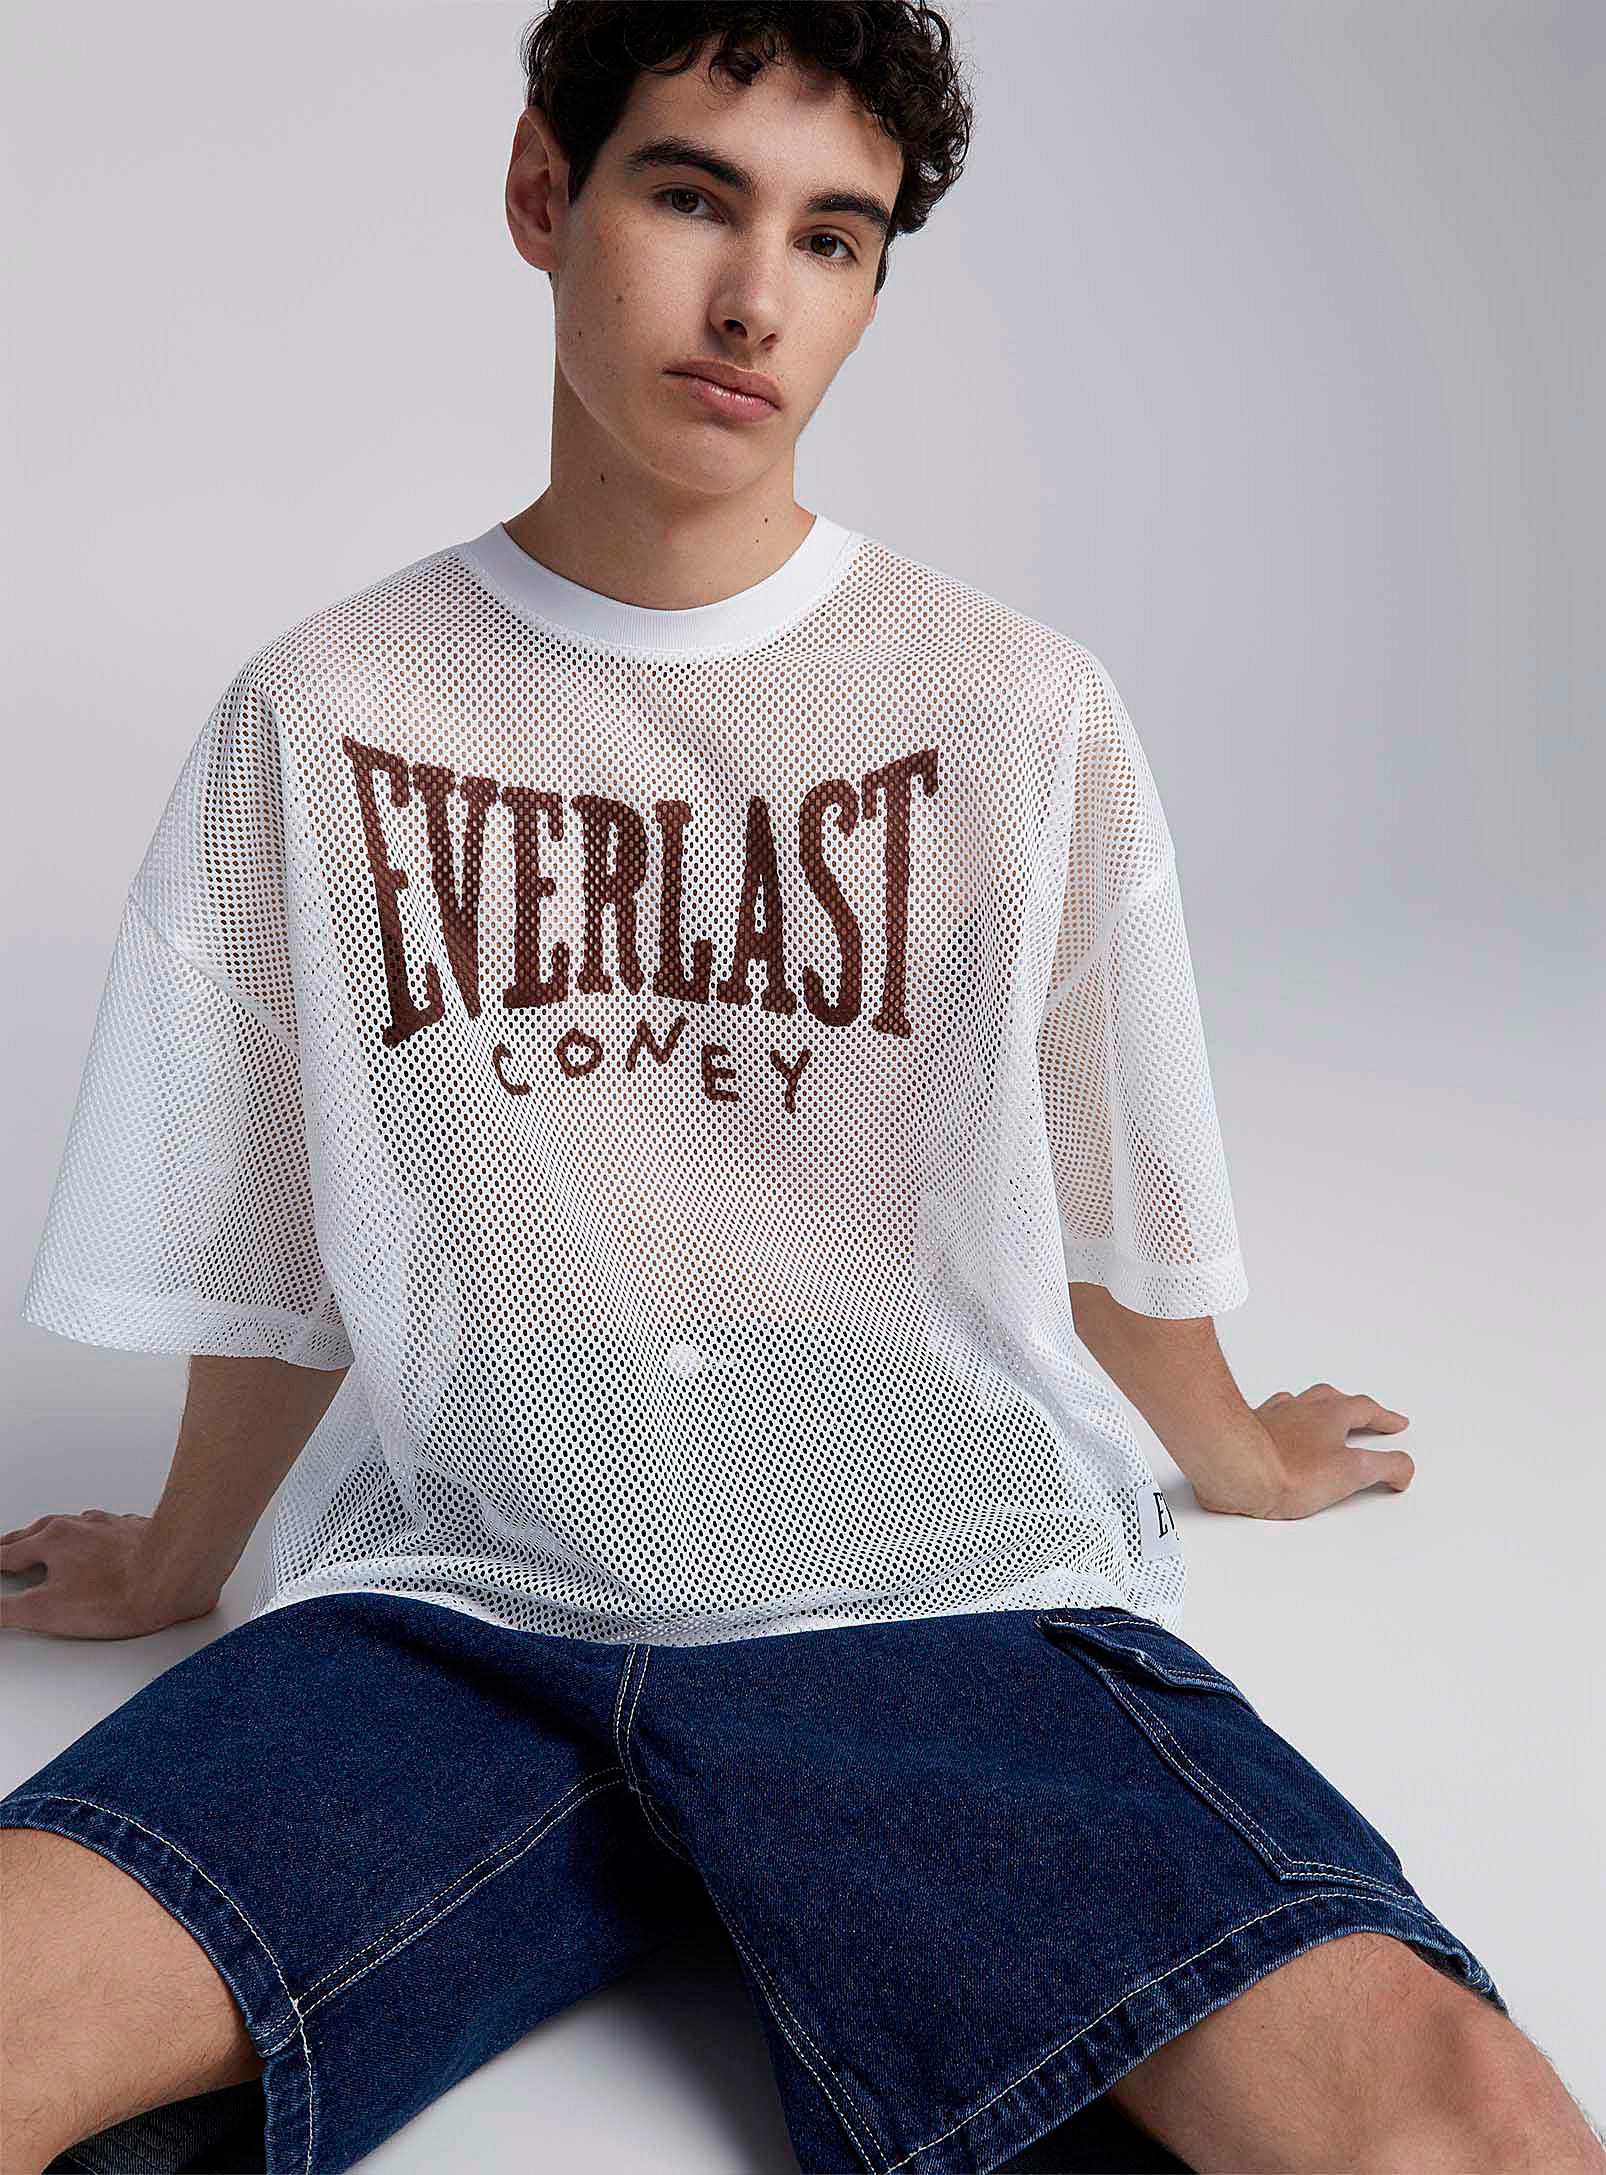 Coney Island Picnic - Men's X Everlast mesh T-shirt